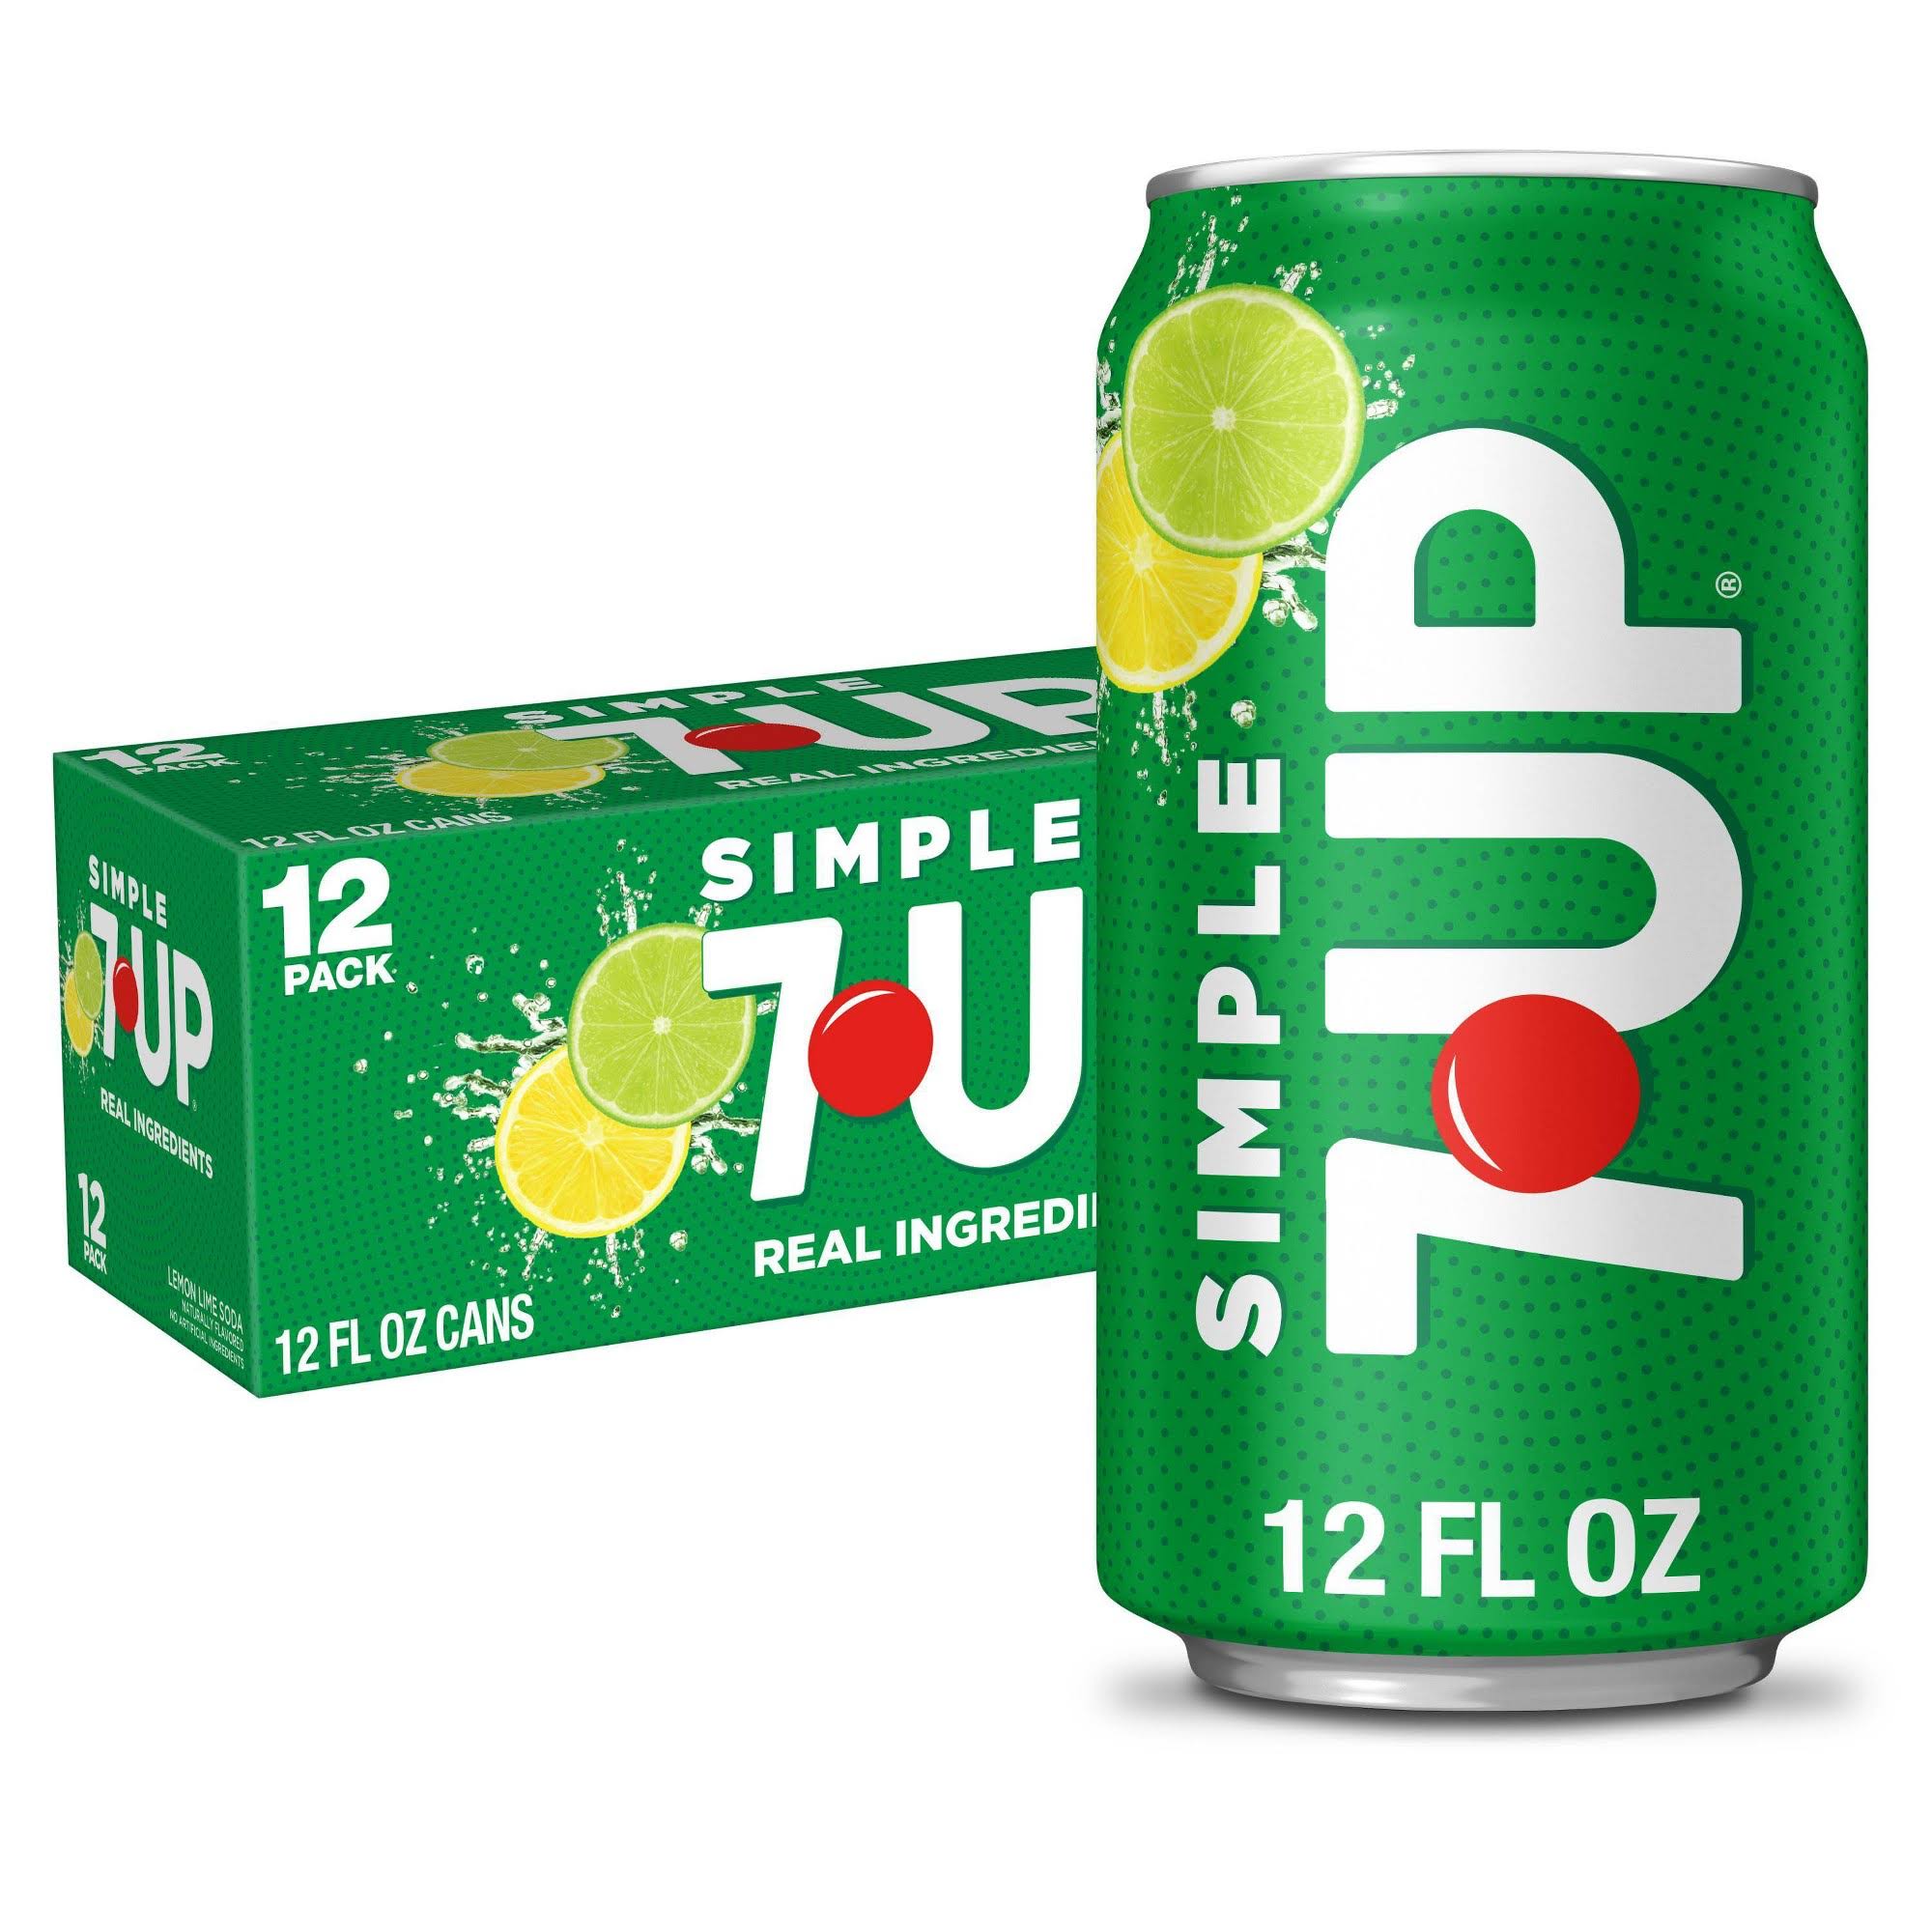 7-Up Simple Soda, Lemon Lime, 12 Pack - 12 pack, 12 fl oz cans